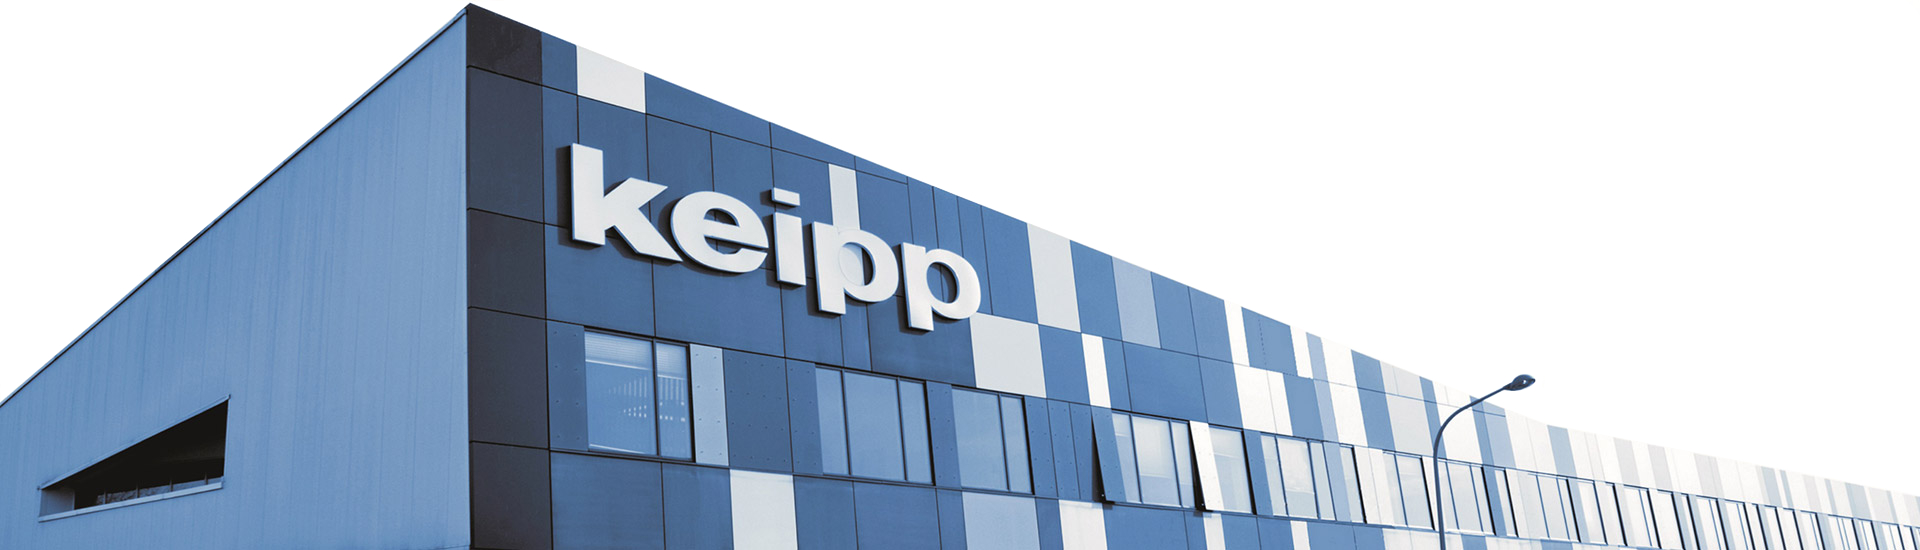 Keipp-Unternehmensgruppe